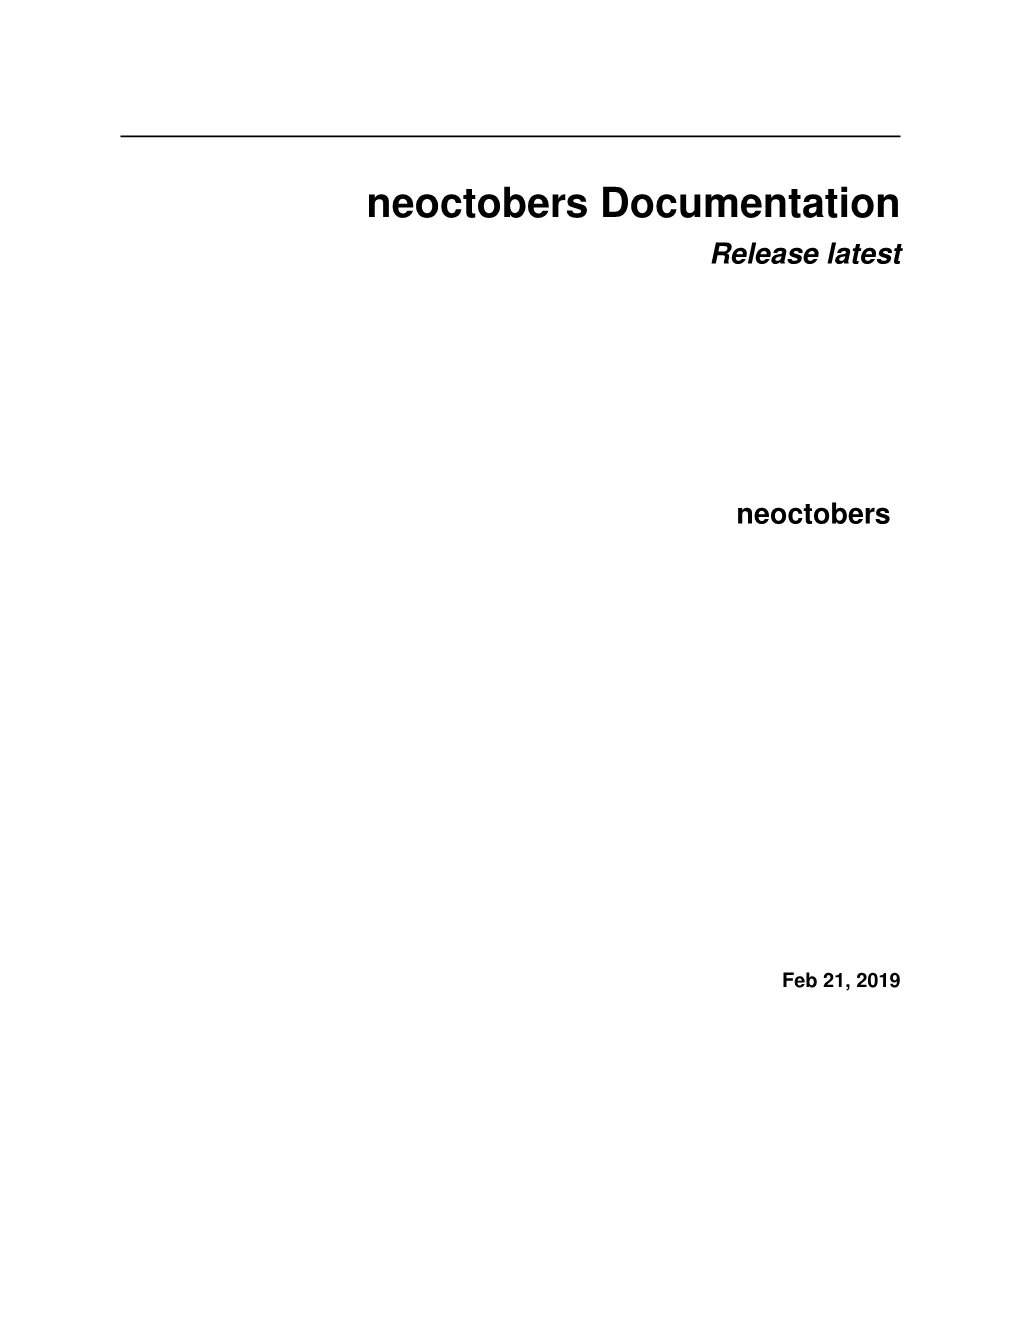 Neoctobers Documentation Release Latest